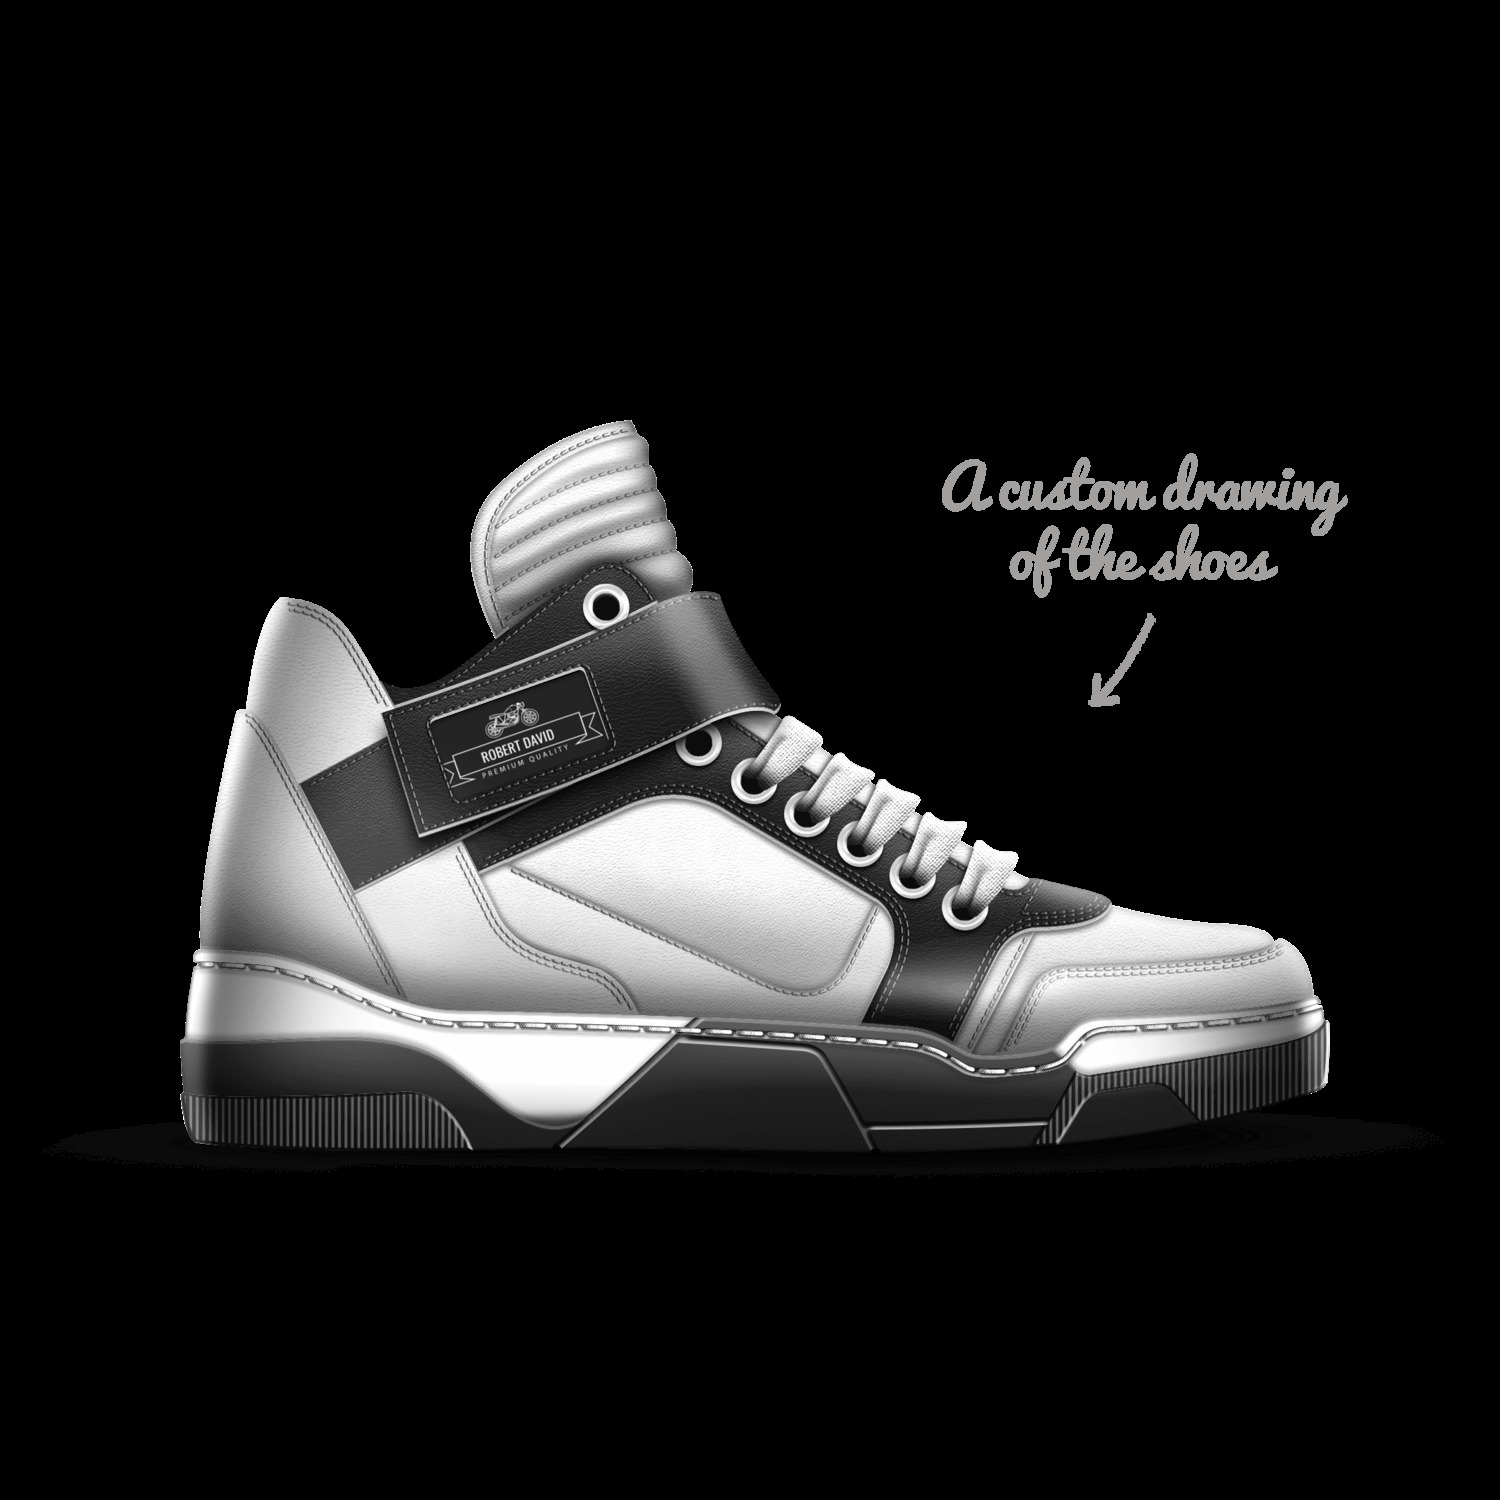 Robert David | A Custom Shoe concept by 